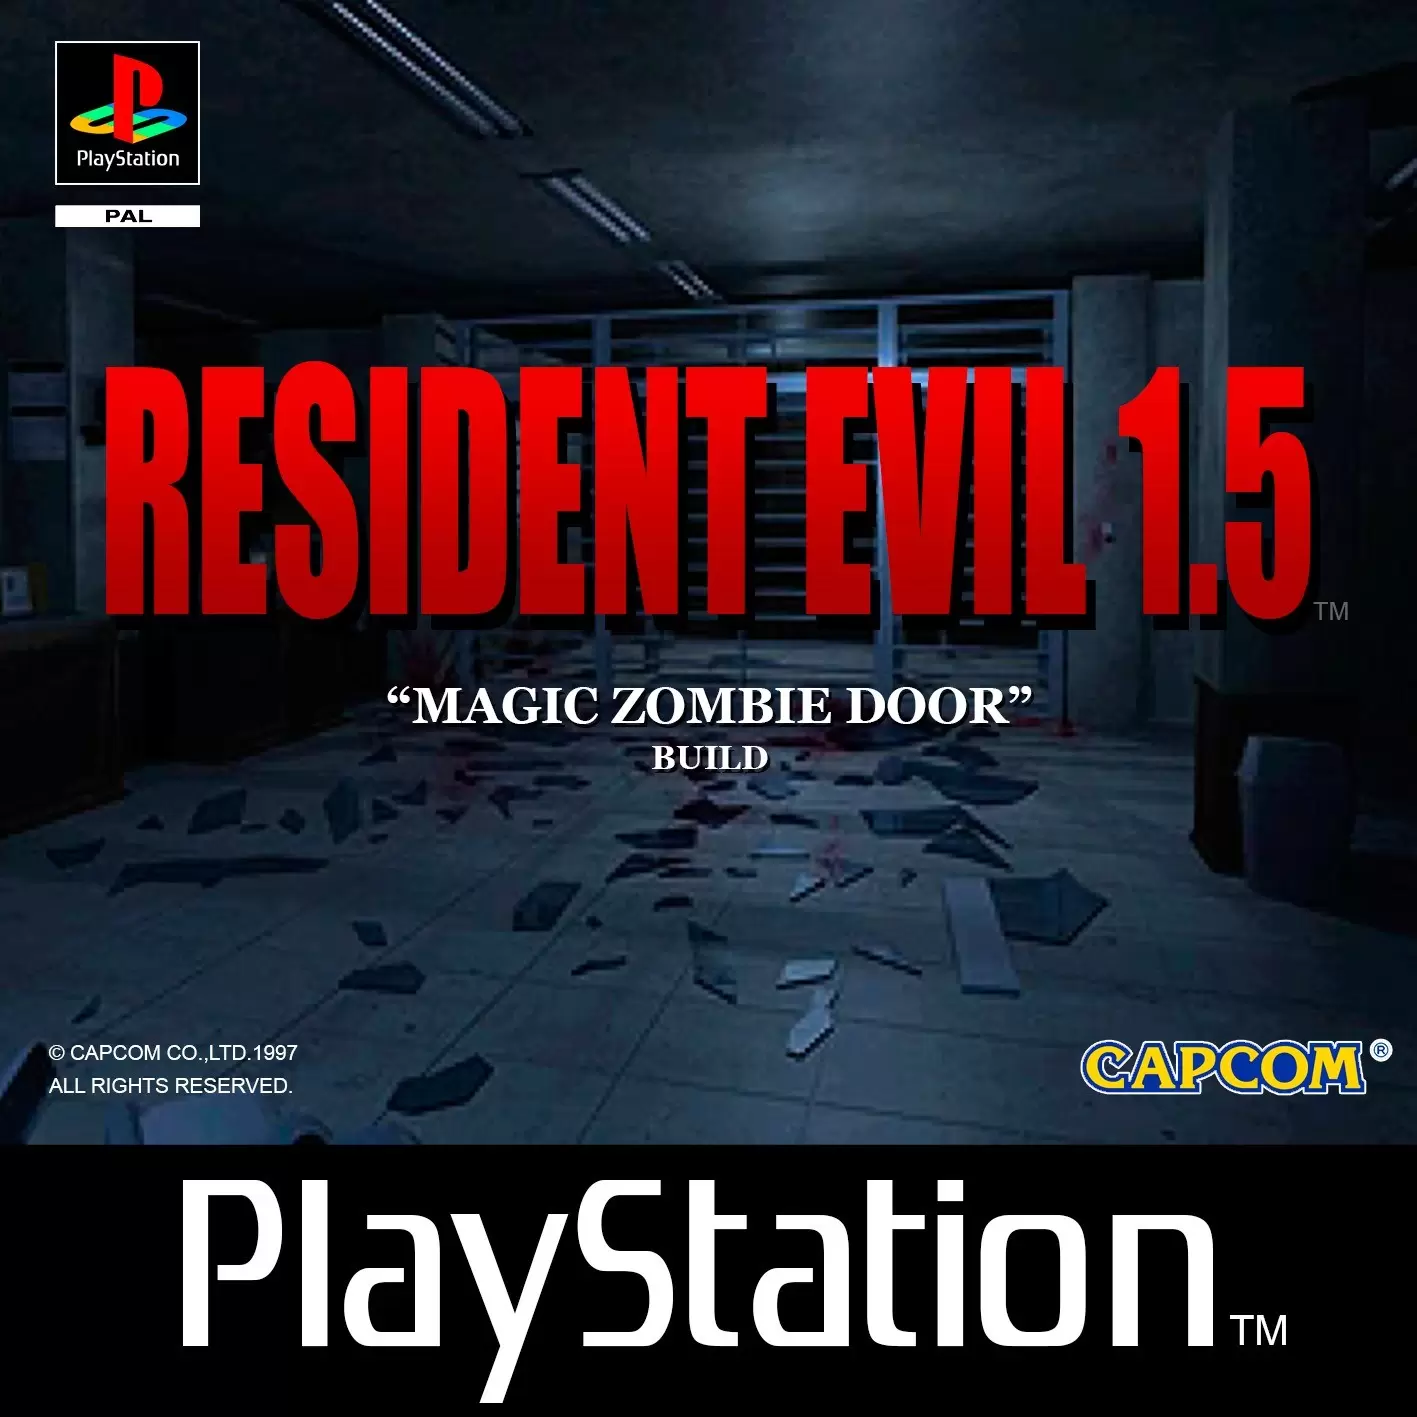 Jeux Playstation PS1 - Resident Evil 1.5